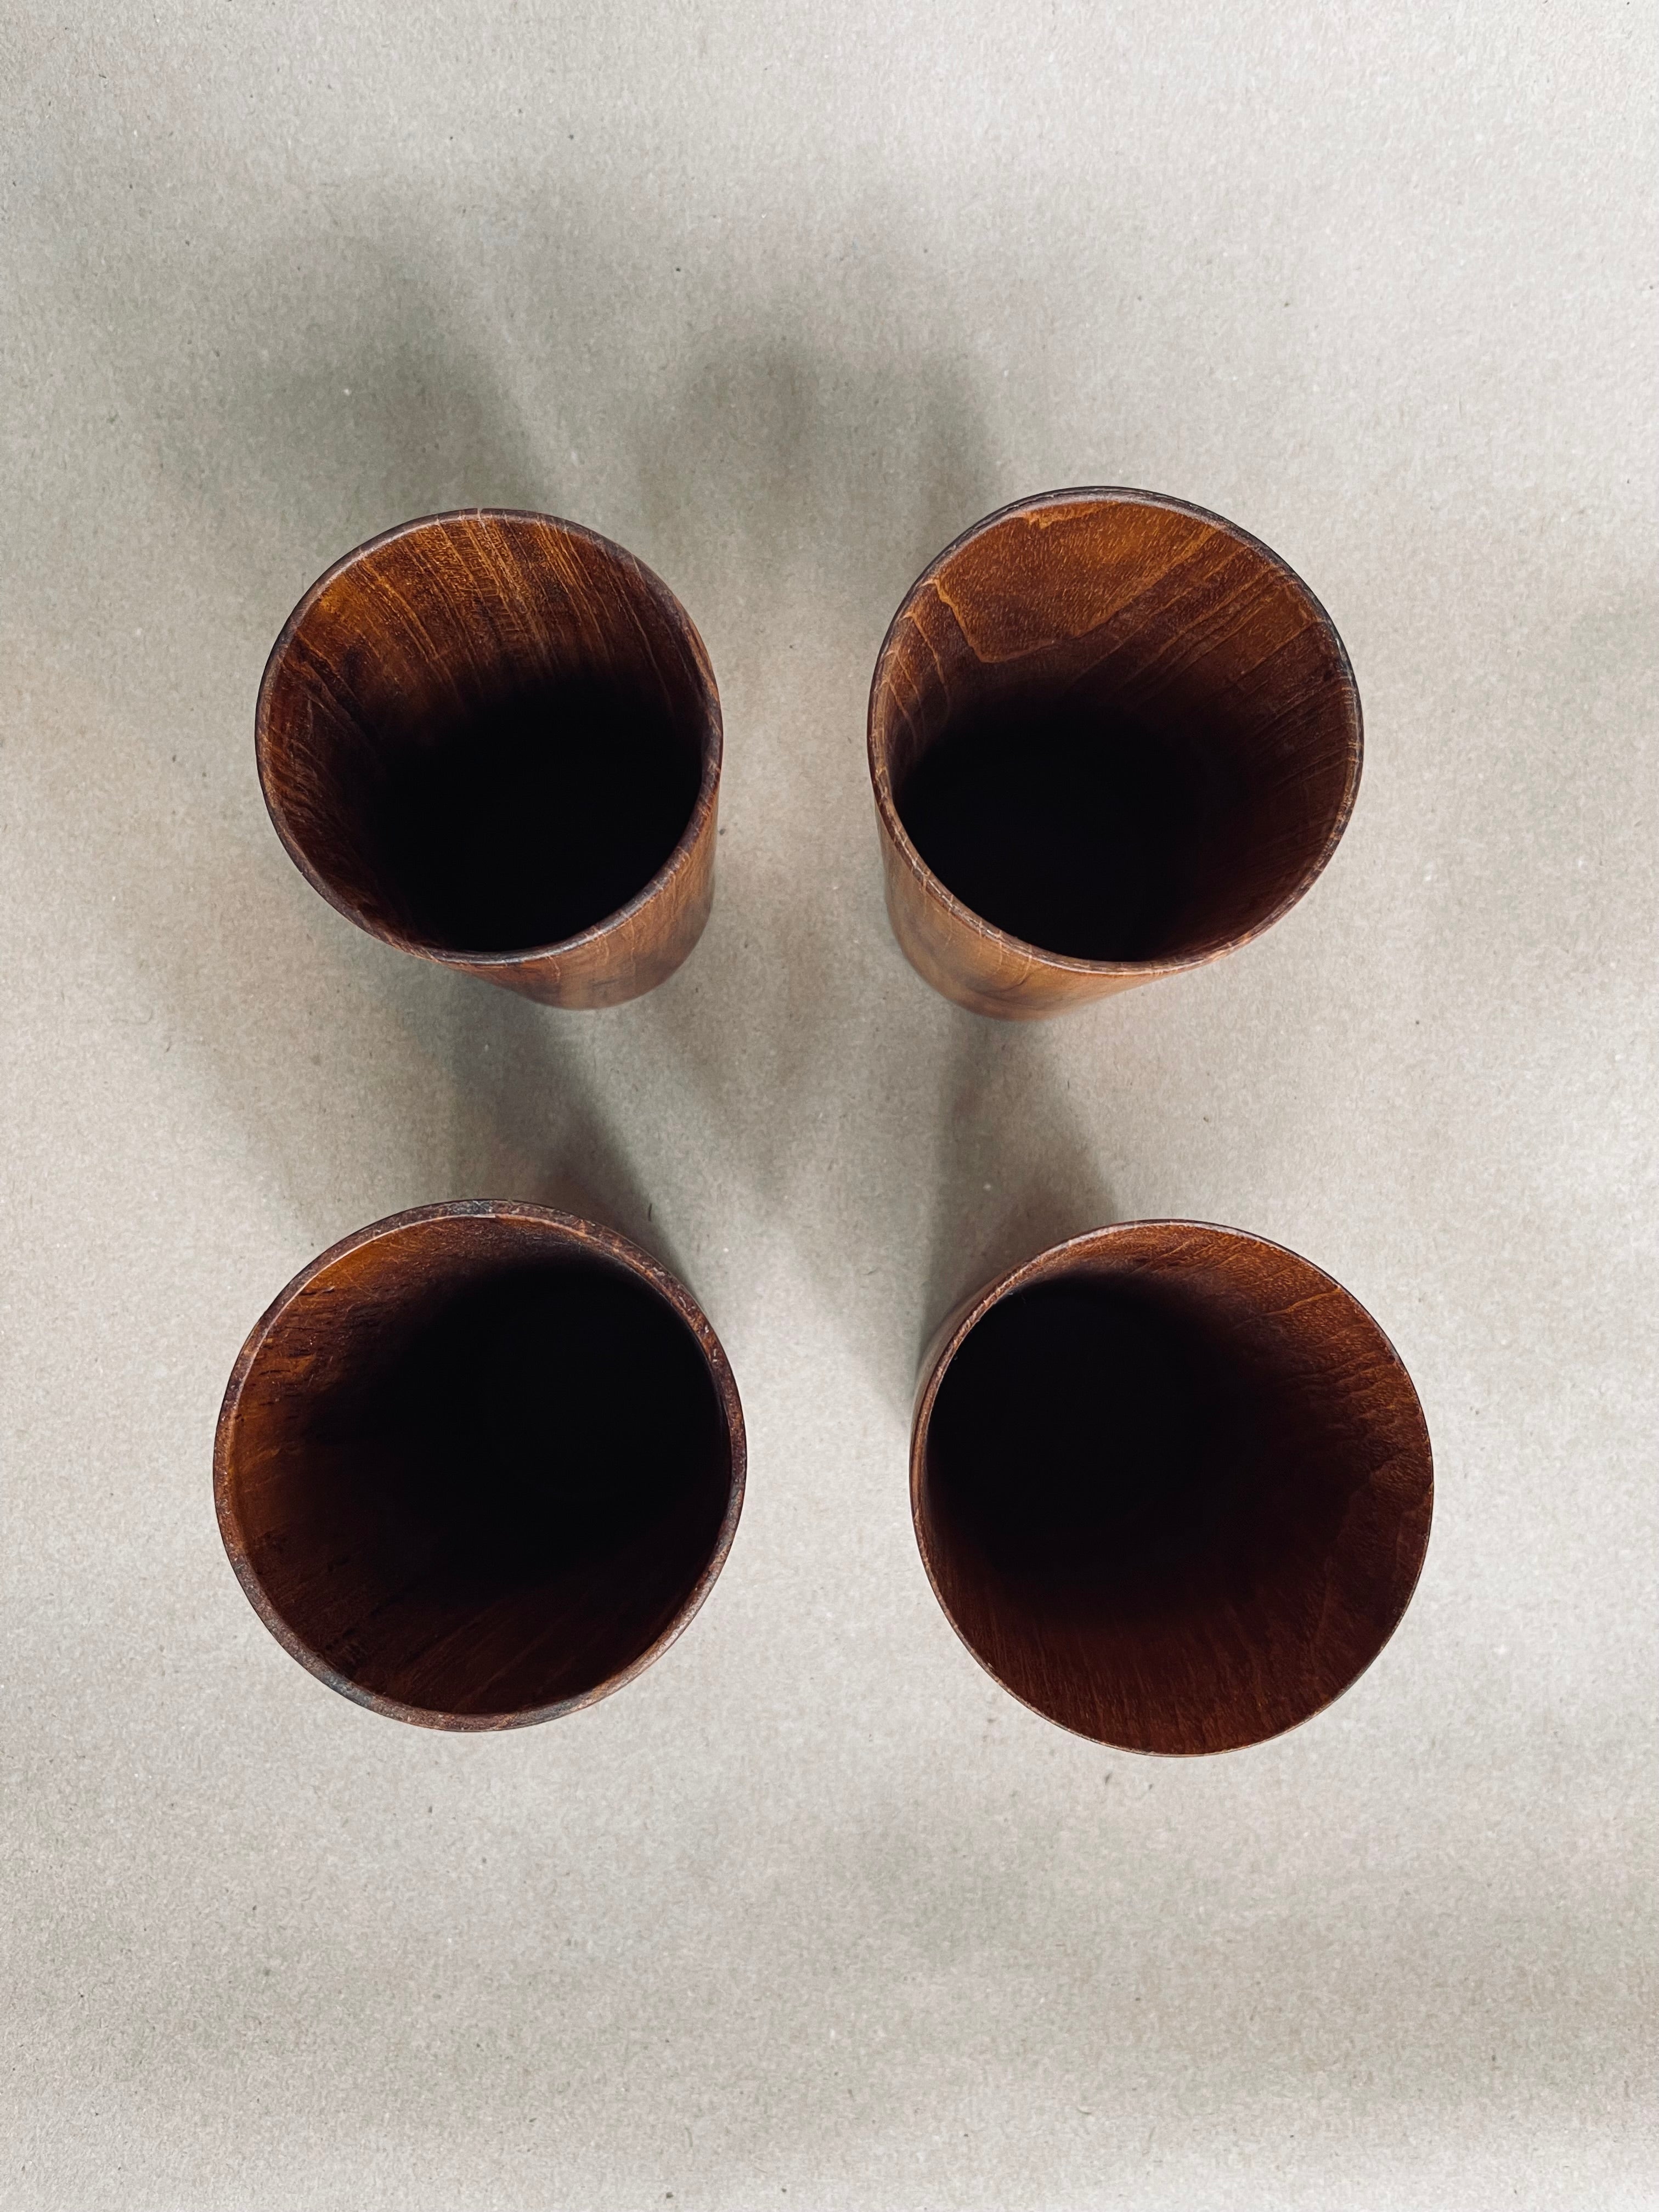 MCM Walnut Cups | Set of 4